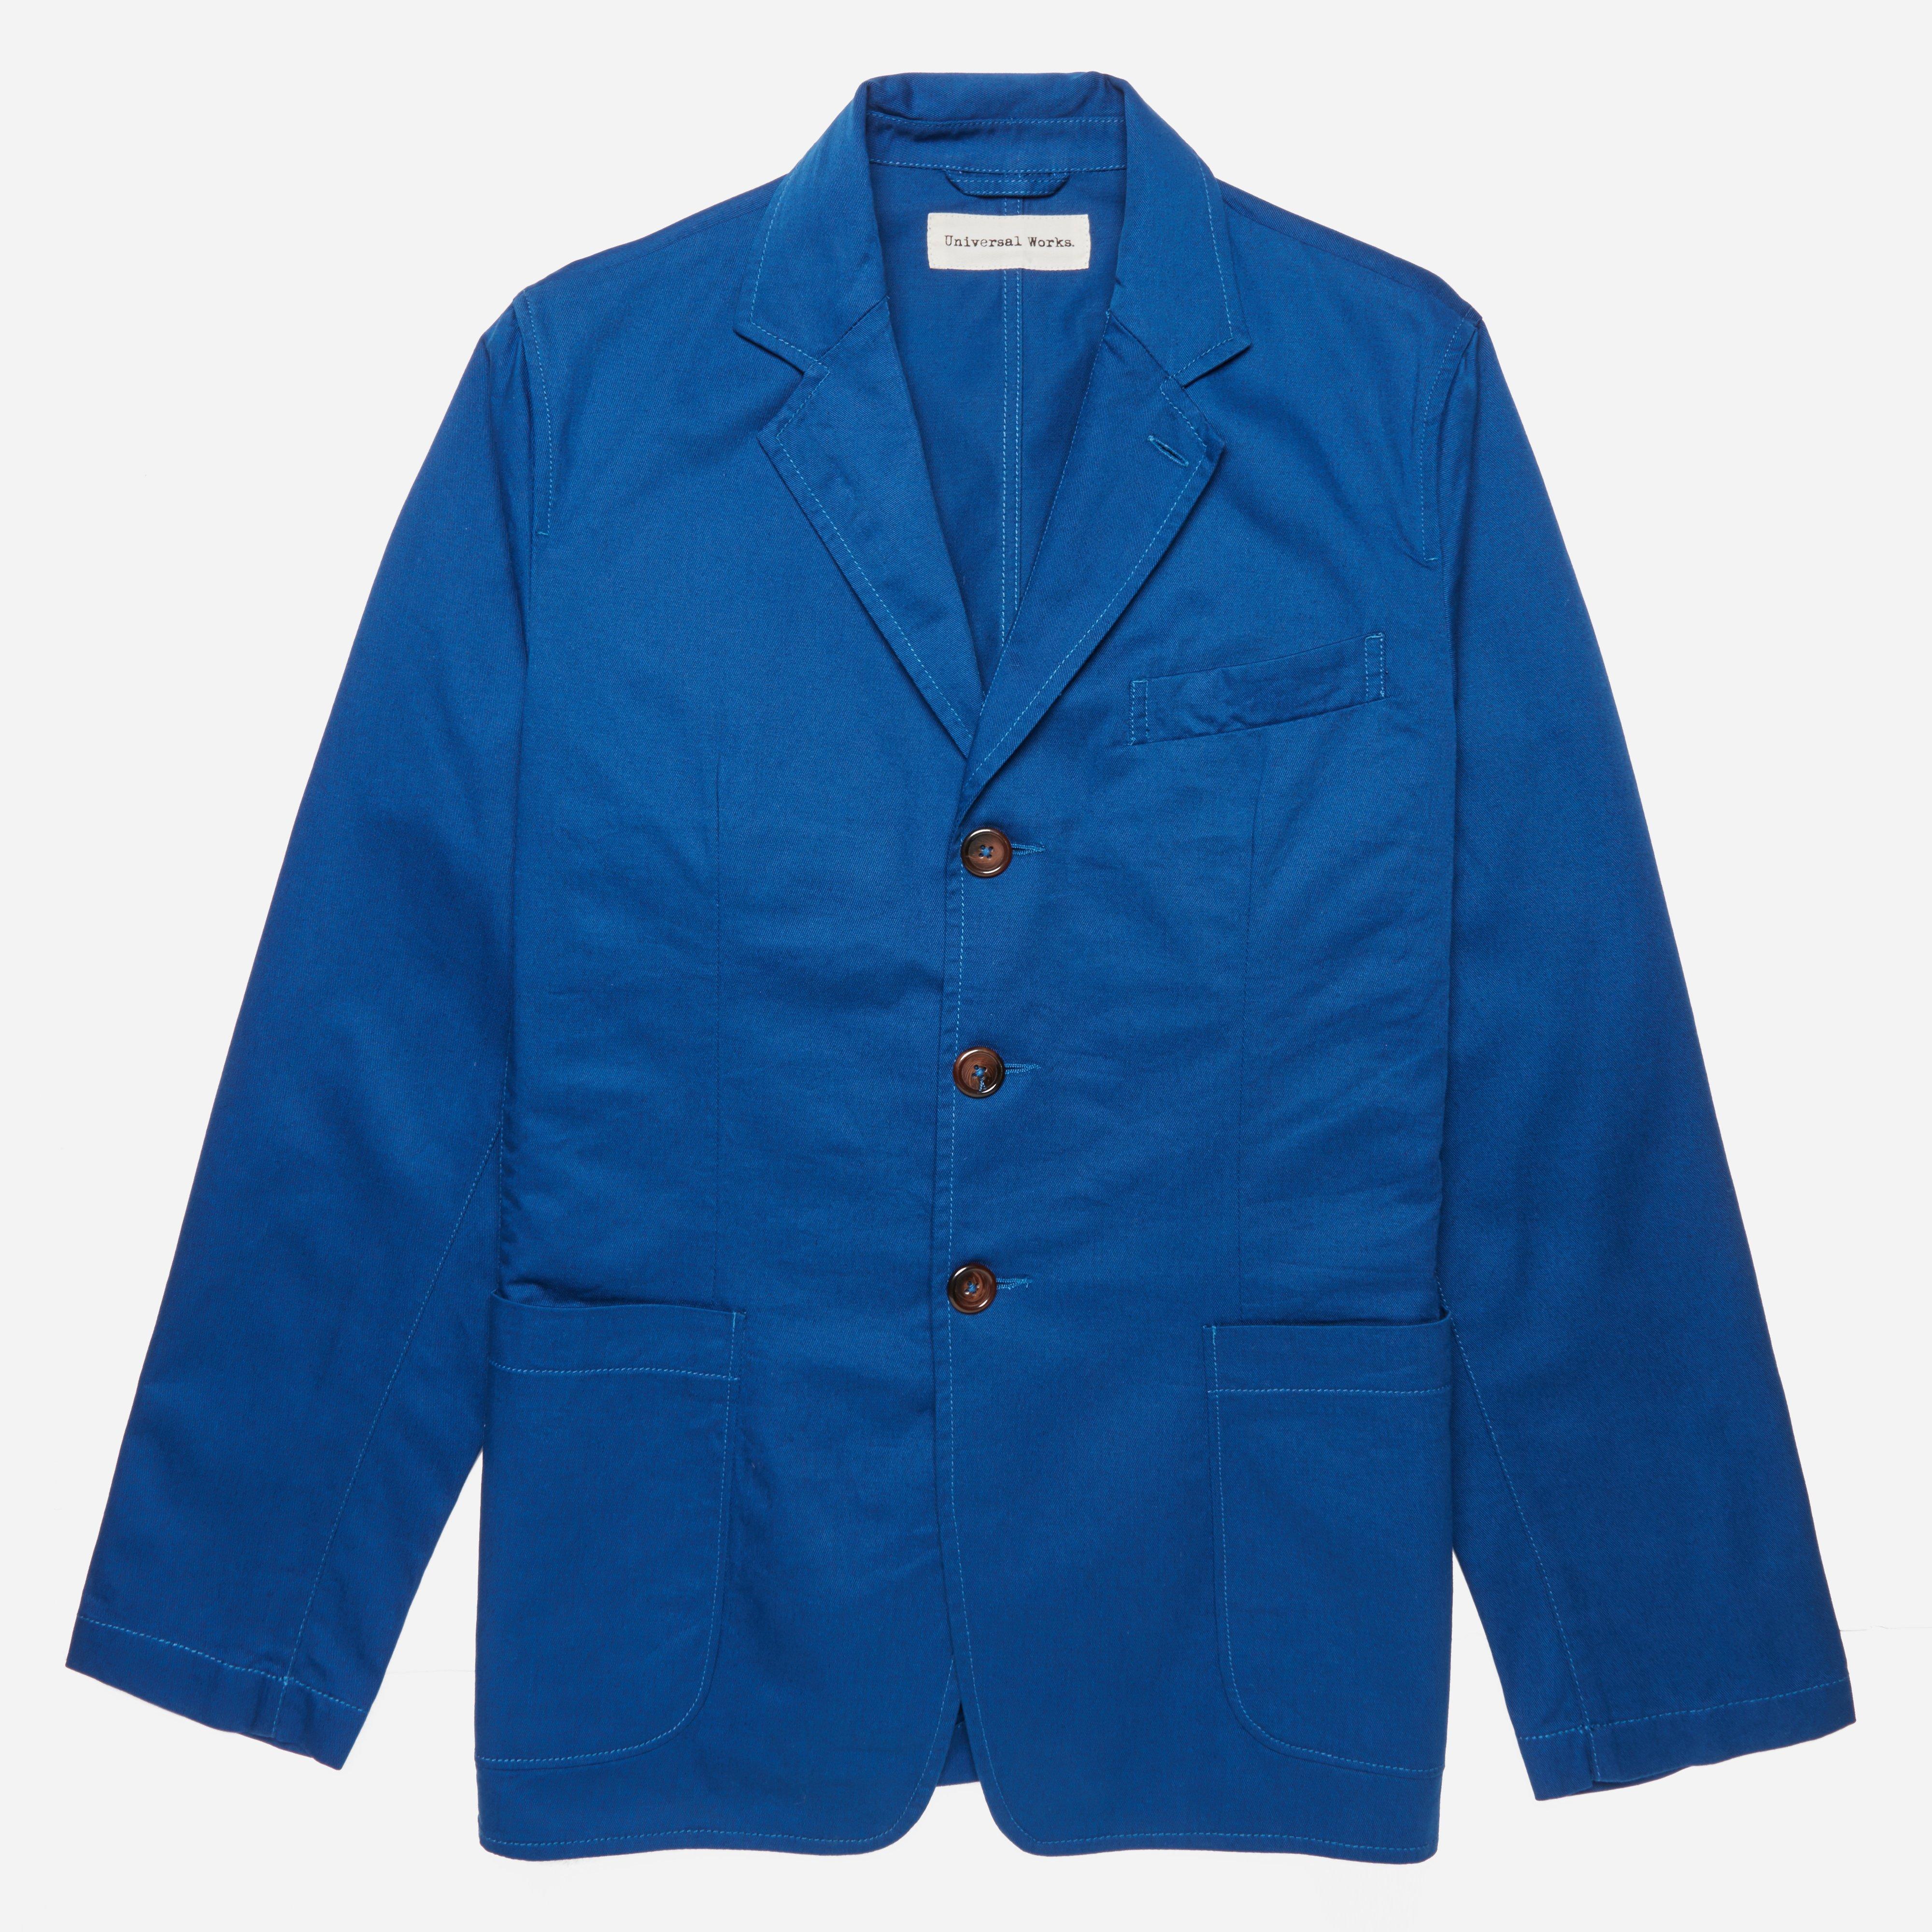 Universal Works Twill London Jacket in Blue for Men - Lyst